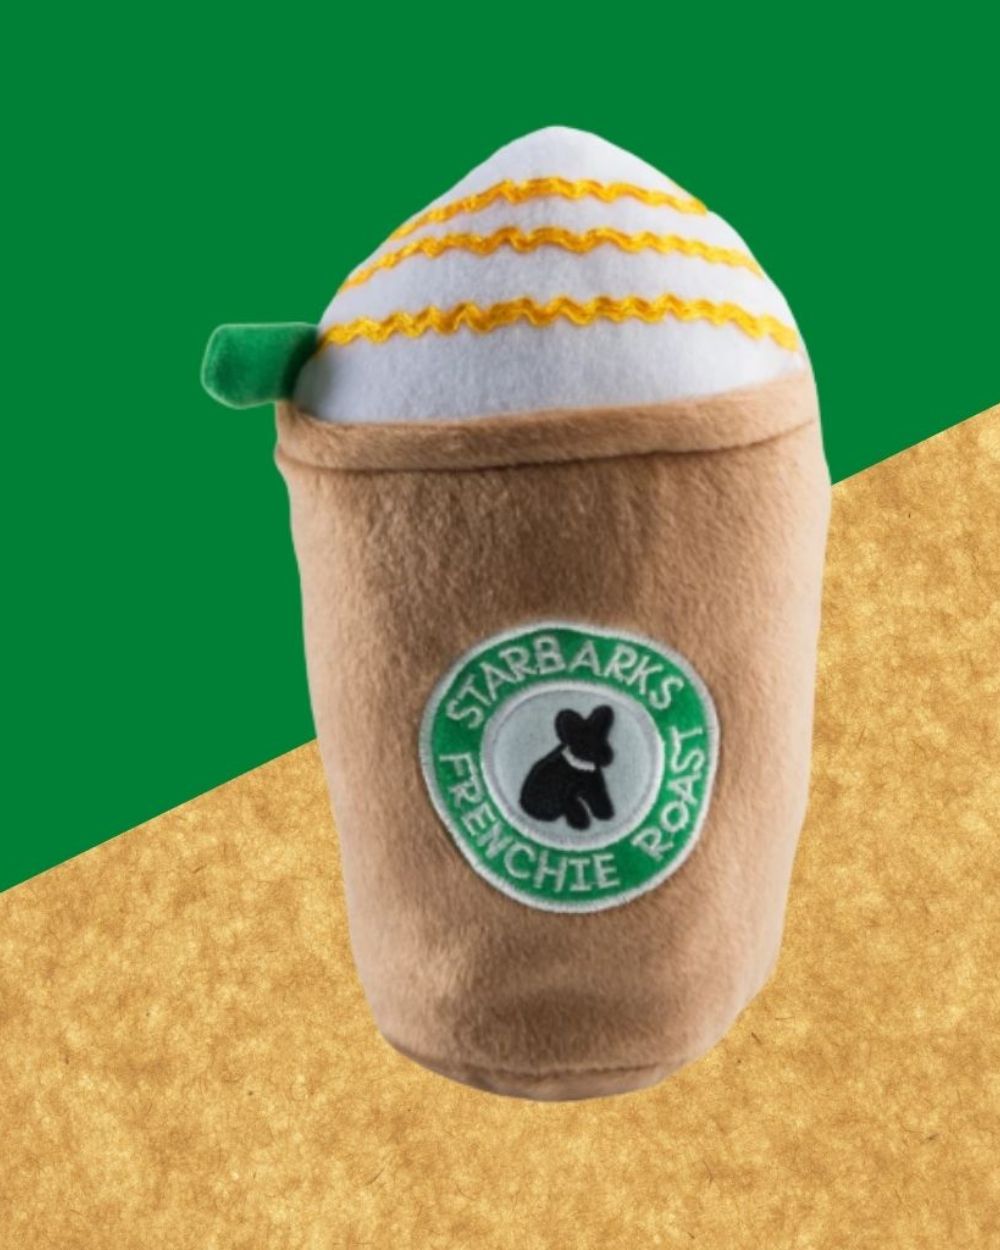 Starbarks Frenchie Roast Plush Toy with straw Squeaker Plush Dog Toy Haute Diggity Dog